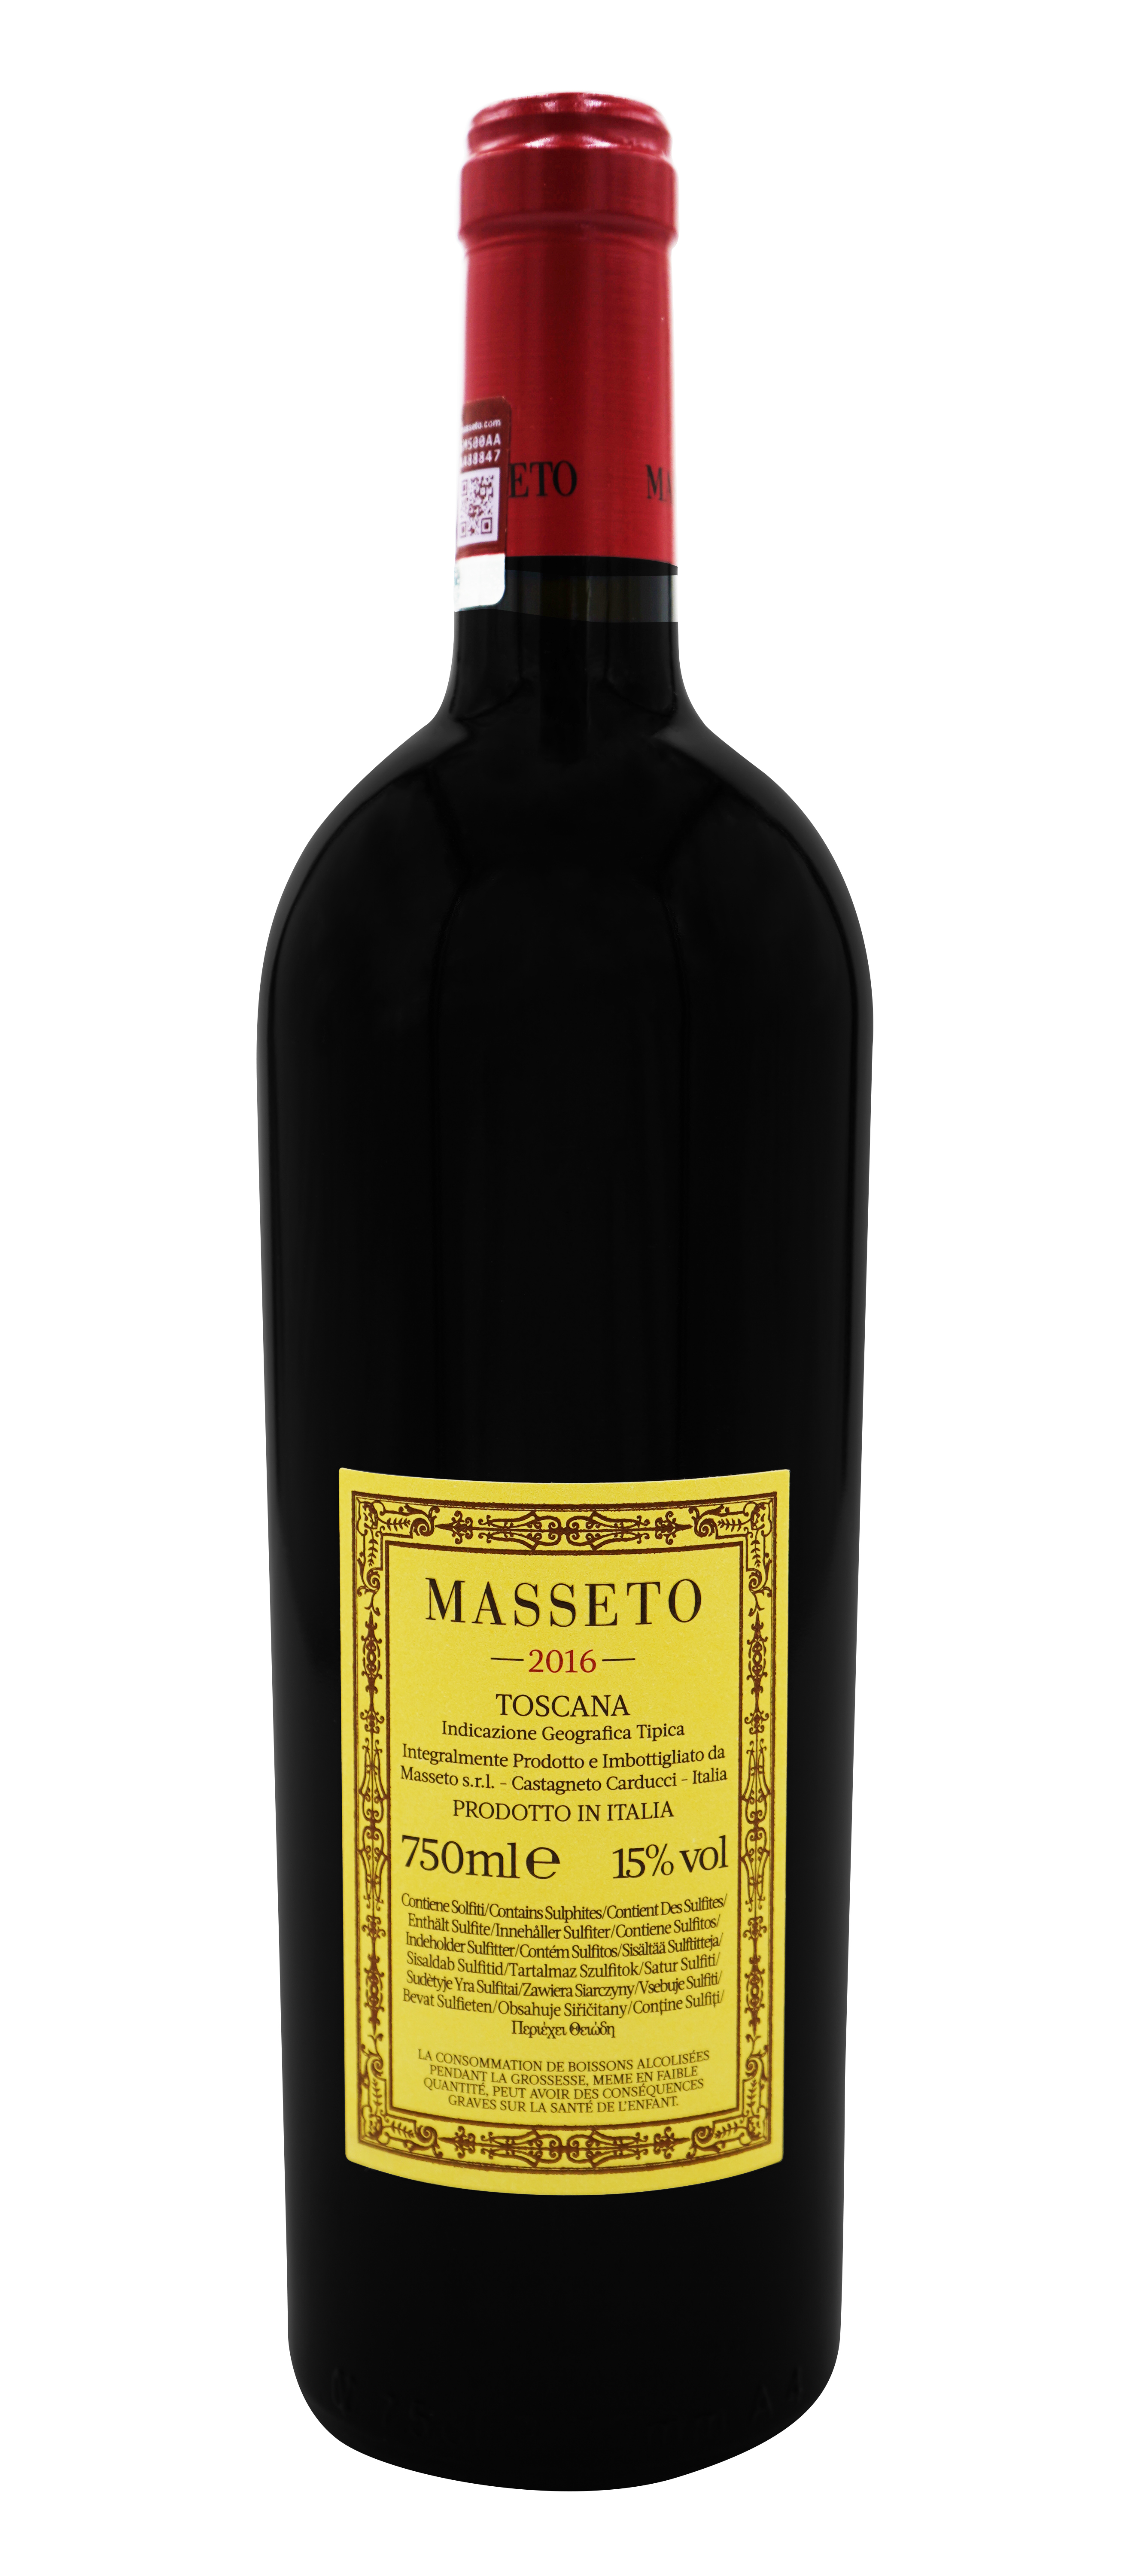 Masseto 2016 - back label